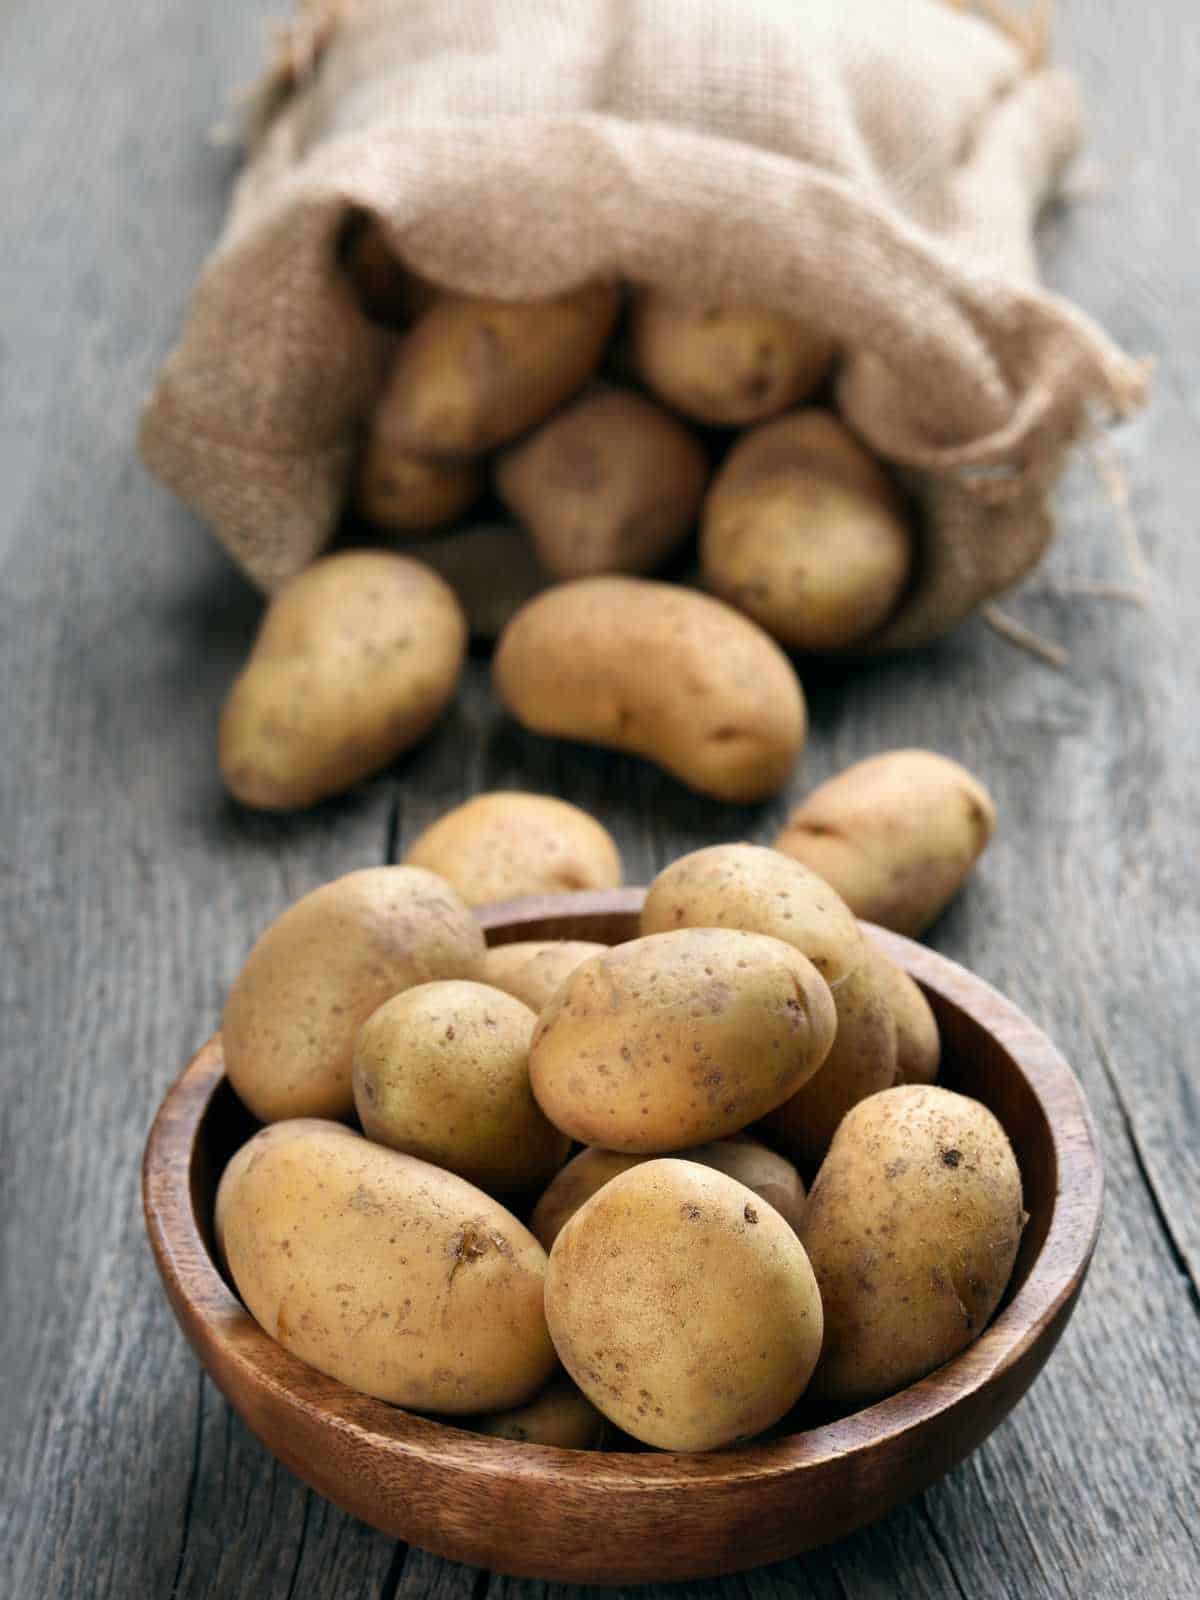 Nutrition & Calories in the Potato